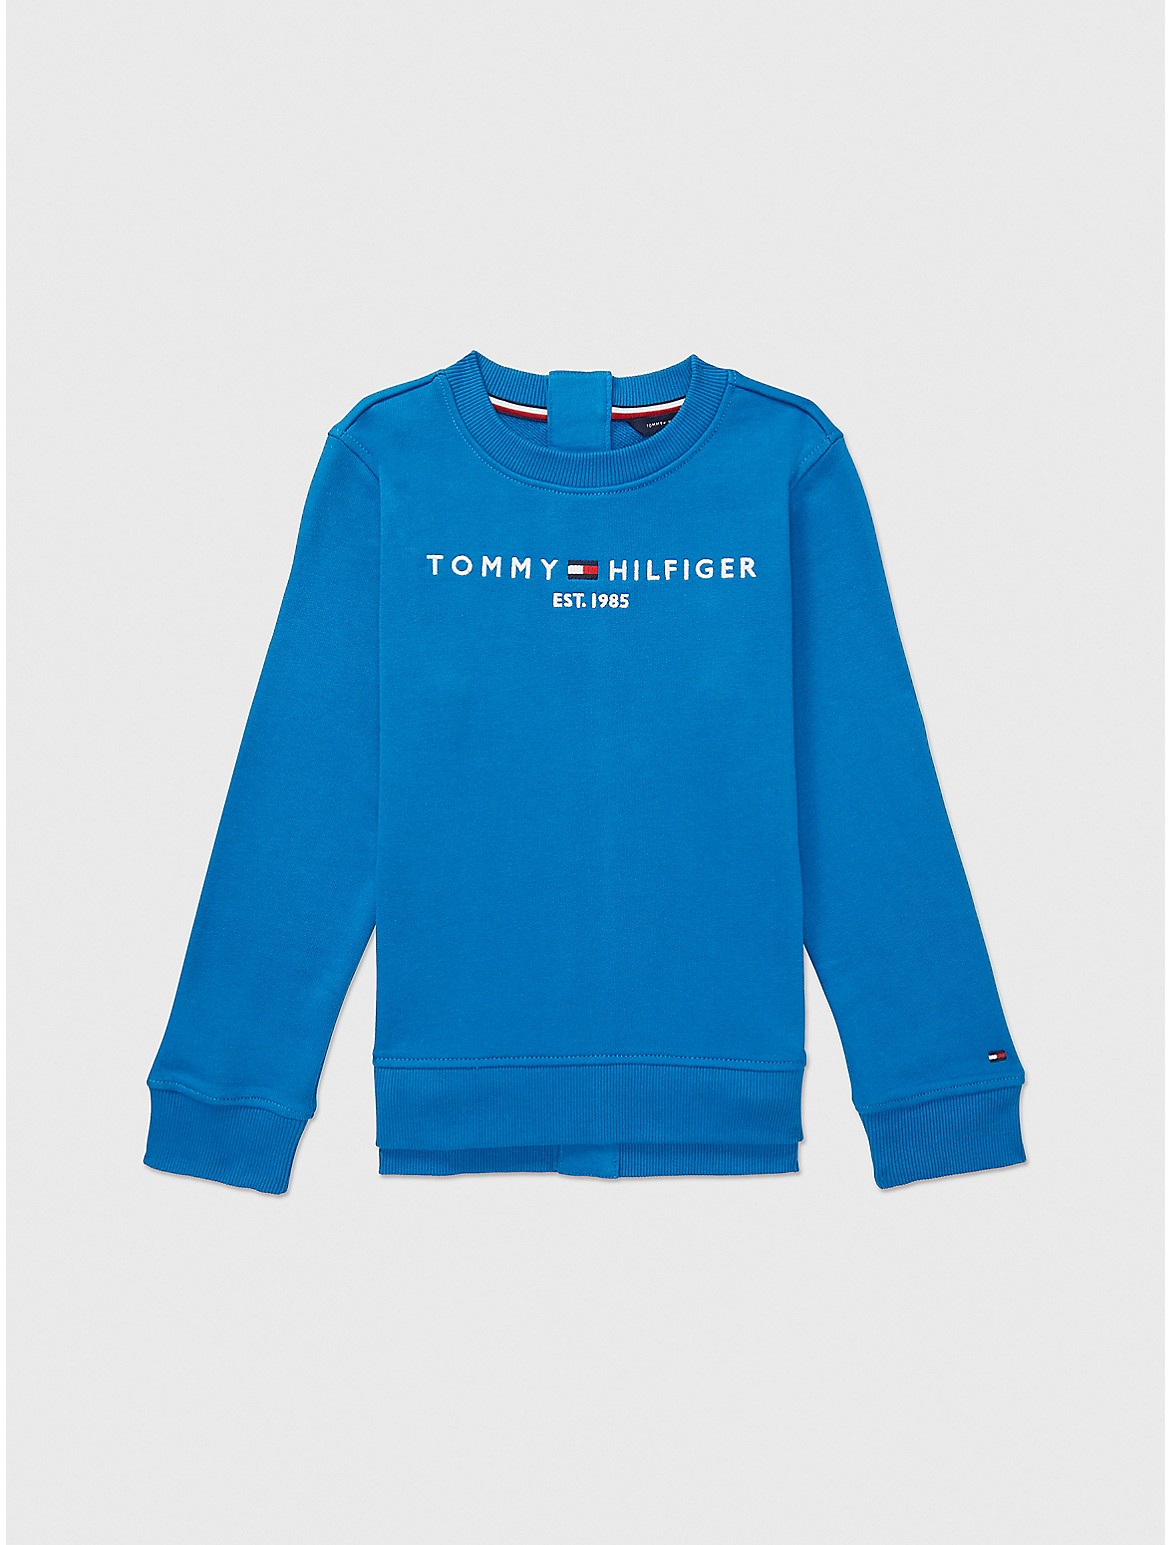 Tommy Hilfiger Boys' Kids' Seated Fit Classic Sweatshirt